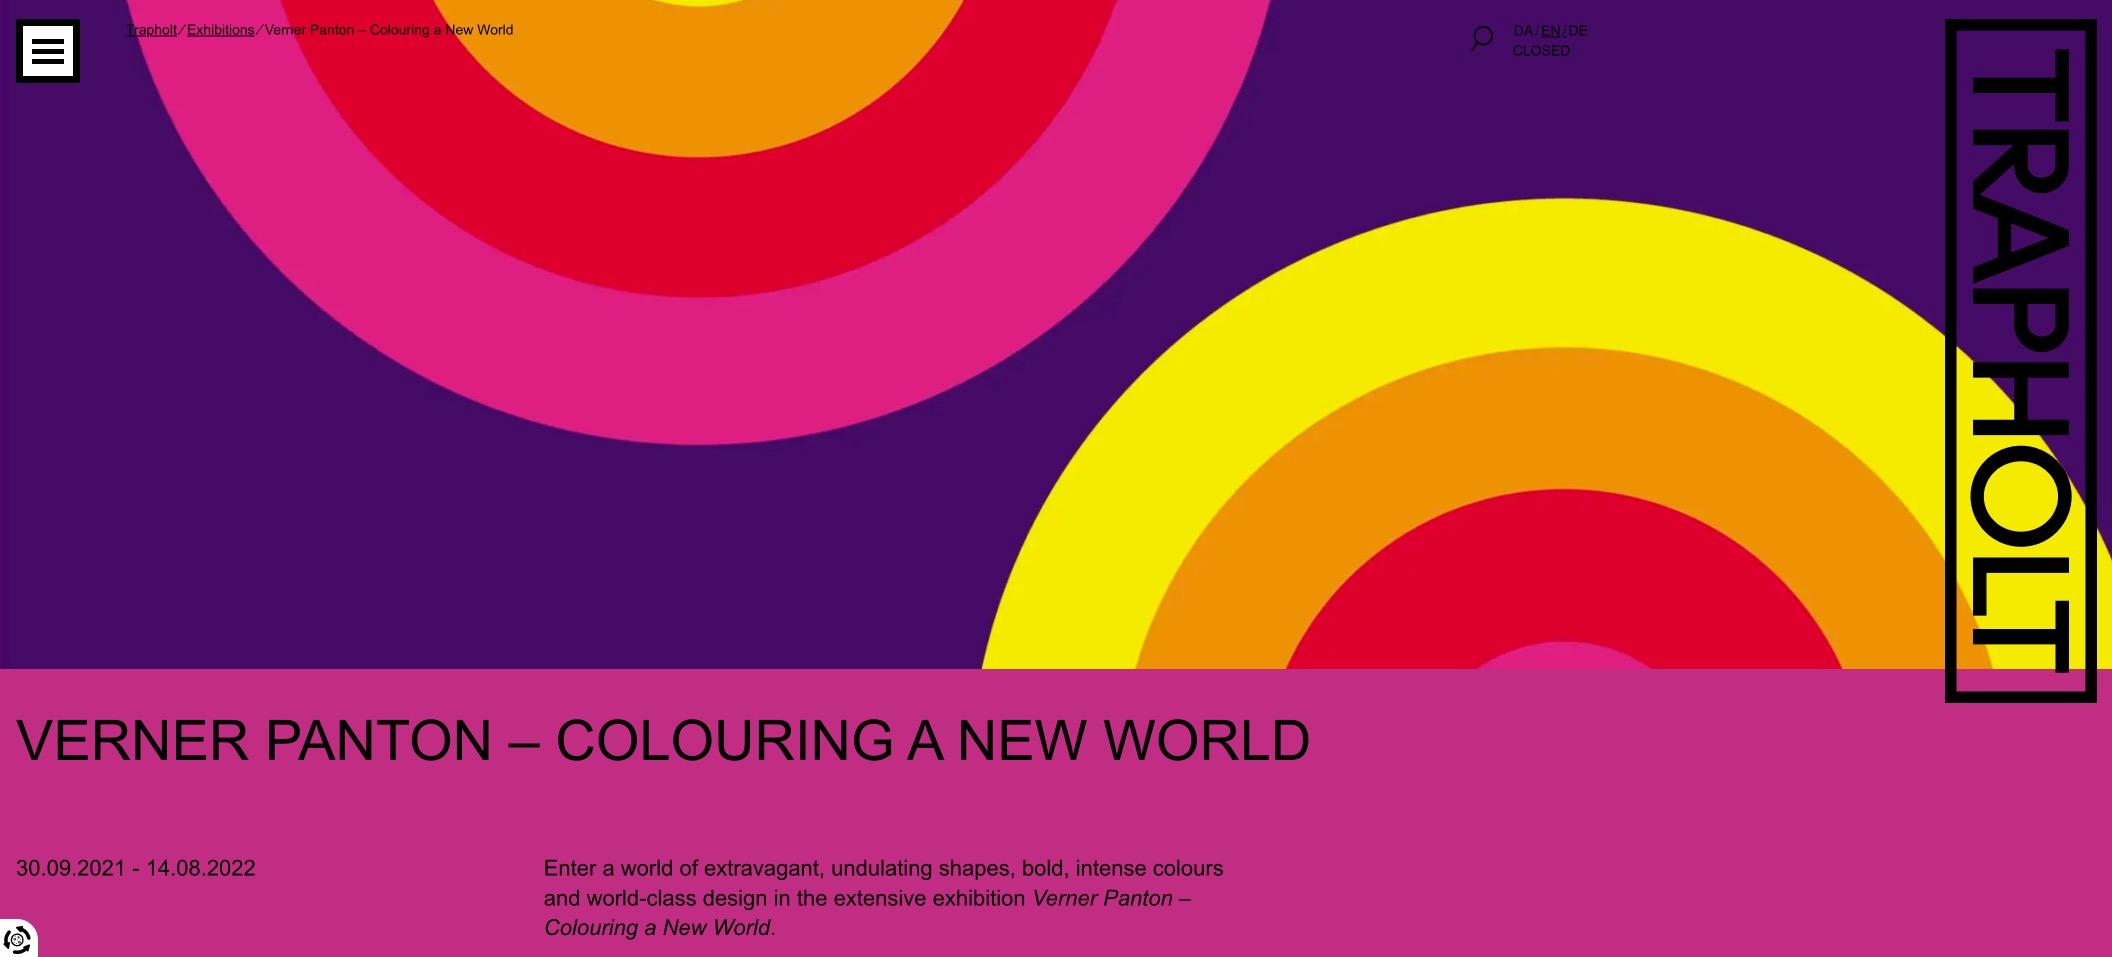 Trapholt - Verner Panton - Coloring a new world